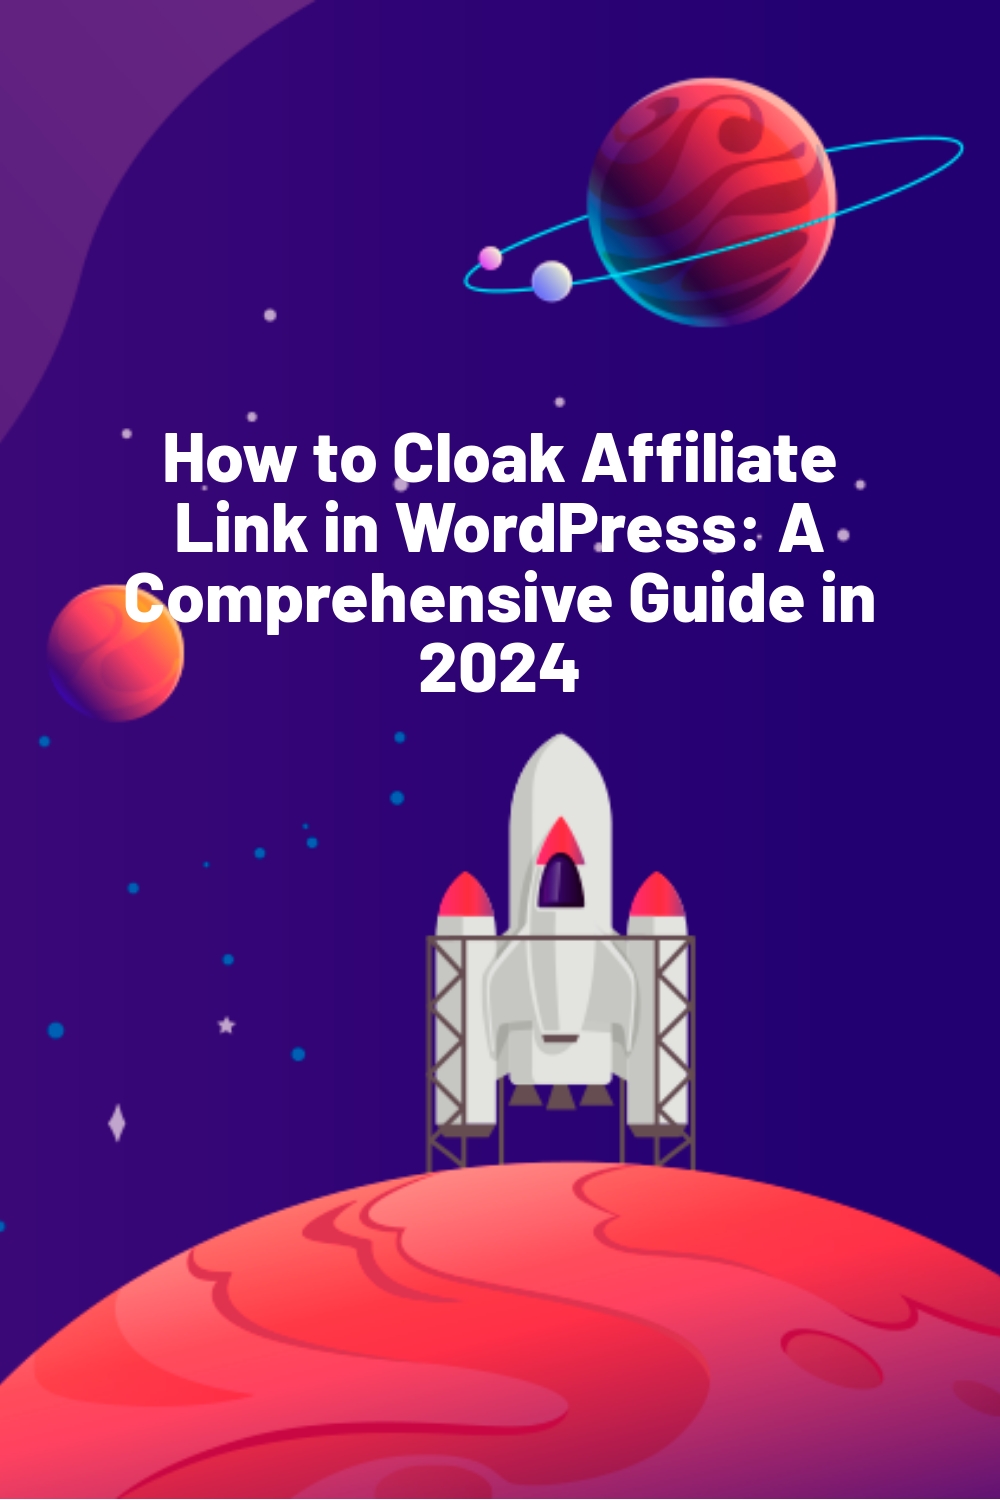 How to Cloak Affiliate Link in WordPress: A Comprehensive Guide in 2024